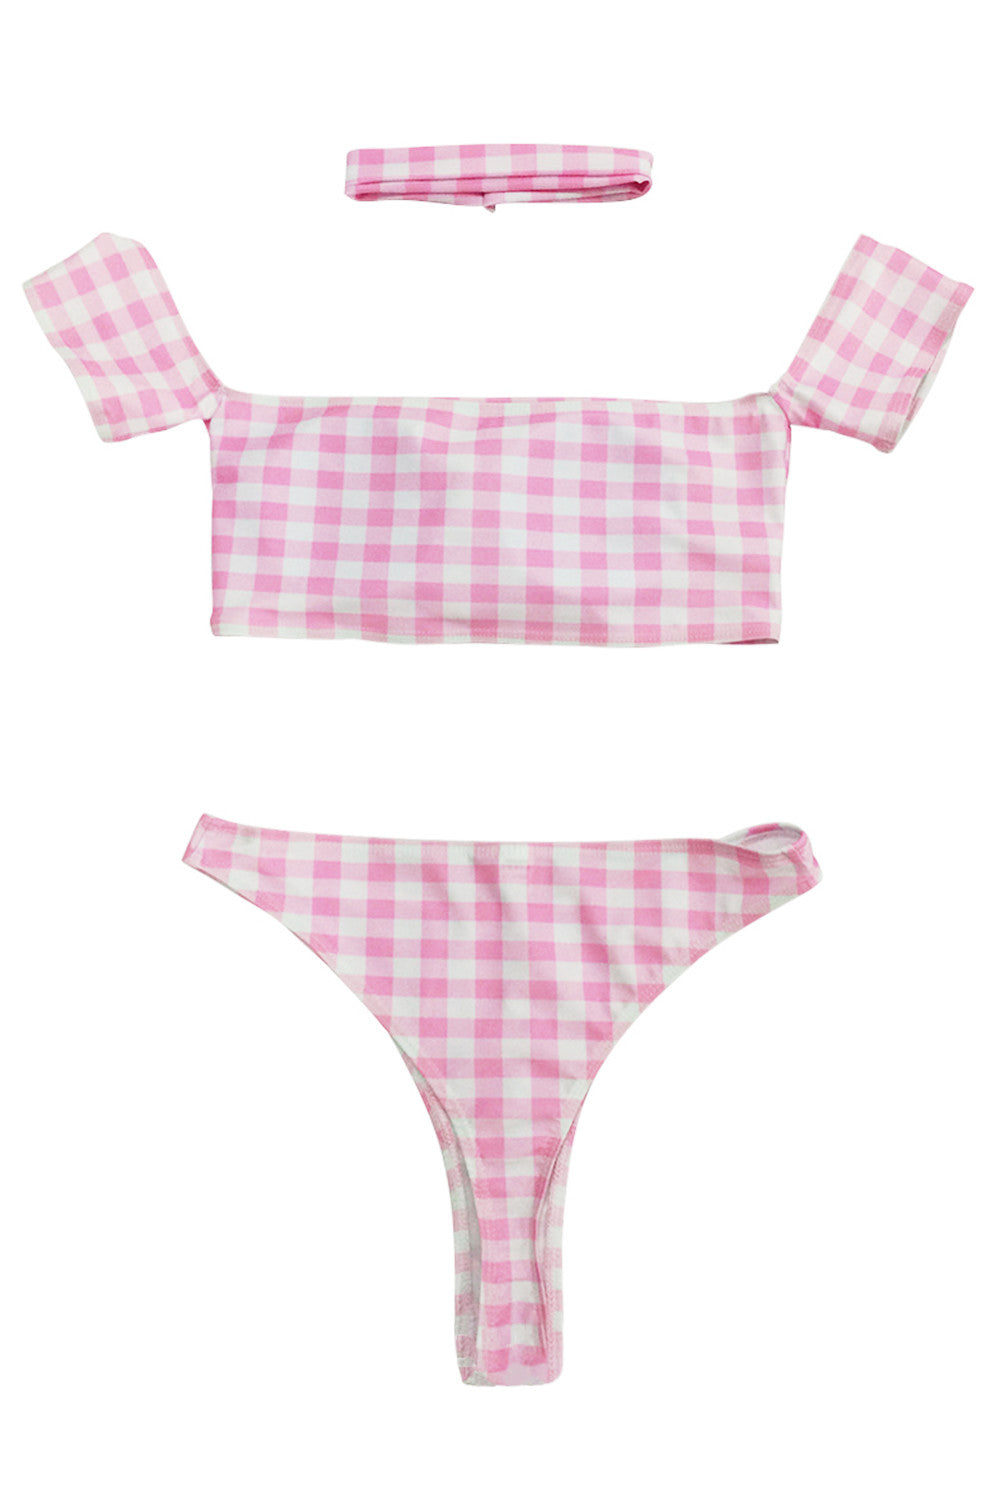 Iyasson Pink Plaid Off-the-shoulder Design Bikini Sets